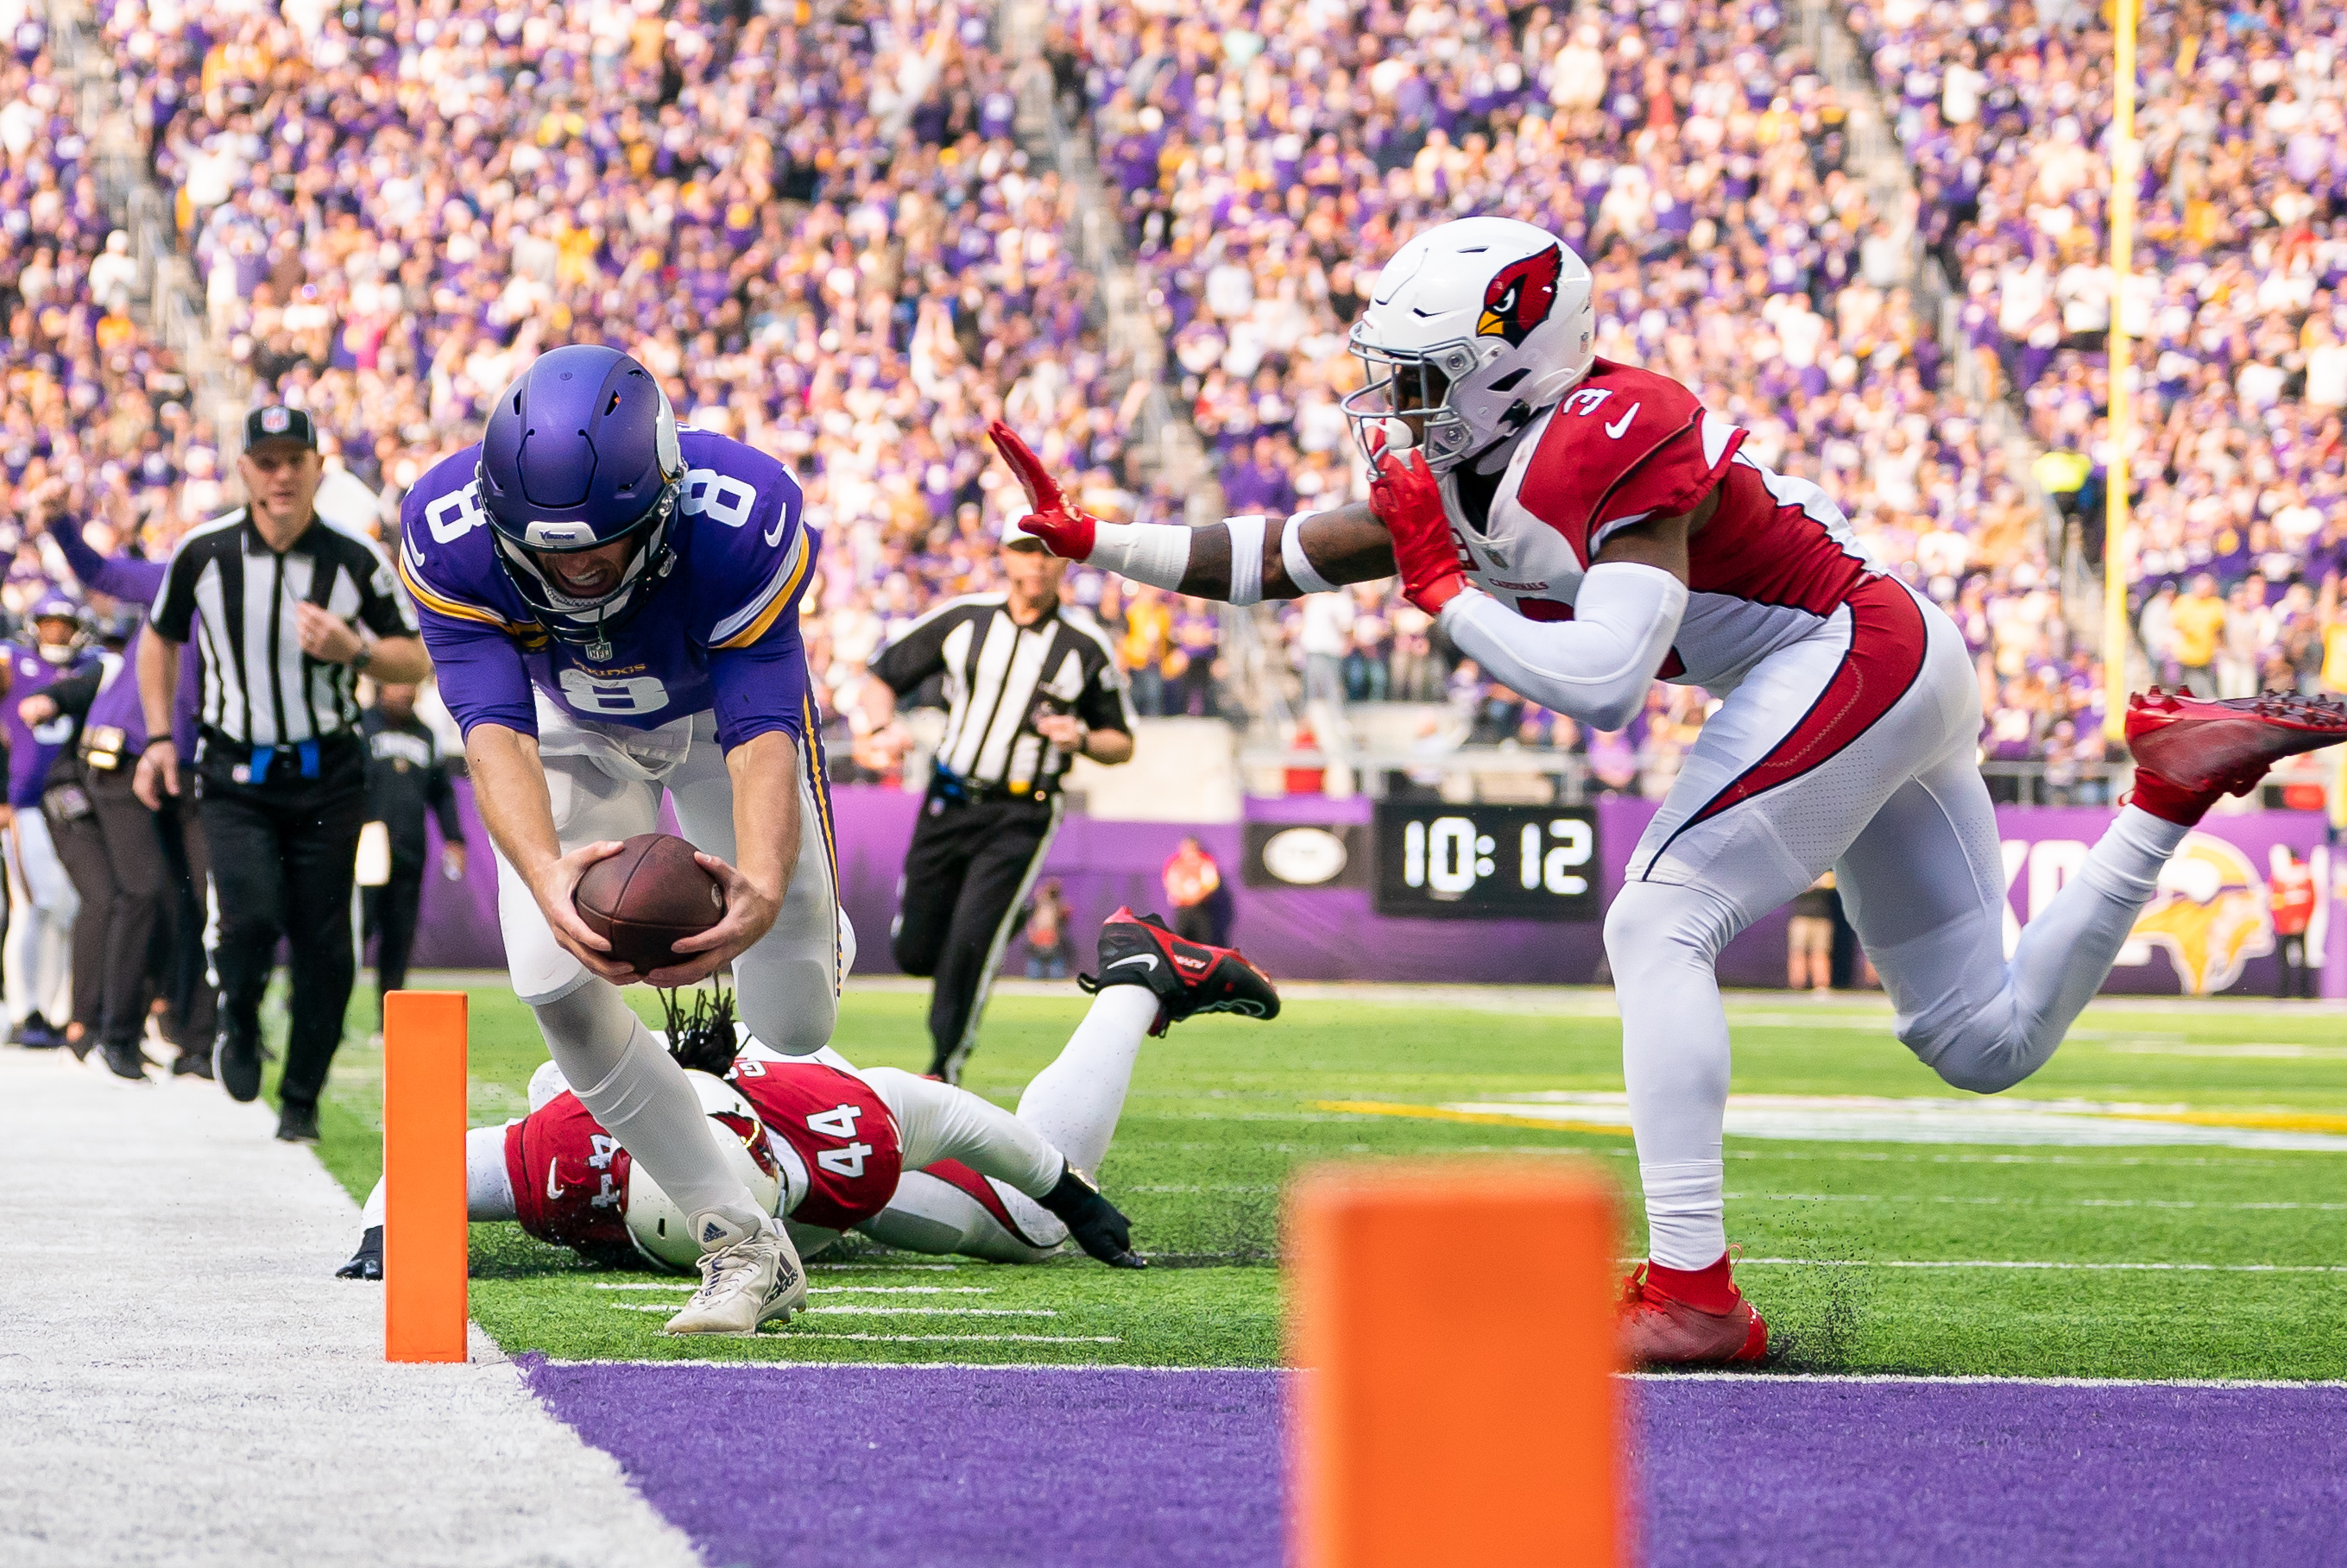 Minnesota quarterback Kirk Cousins scrambles for a touchdown as a Cardinals defender chases him